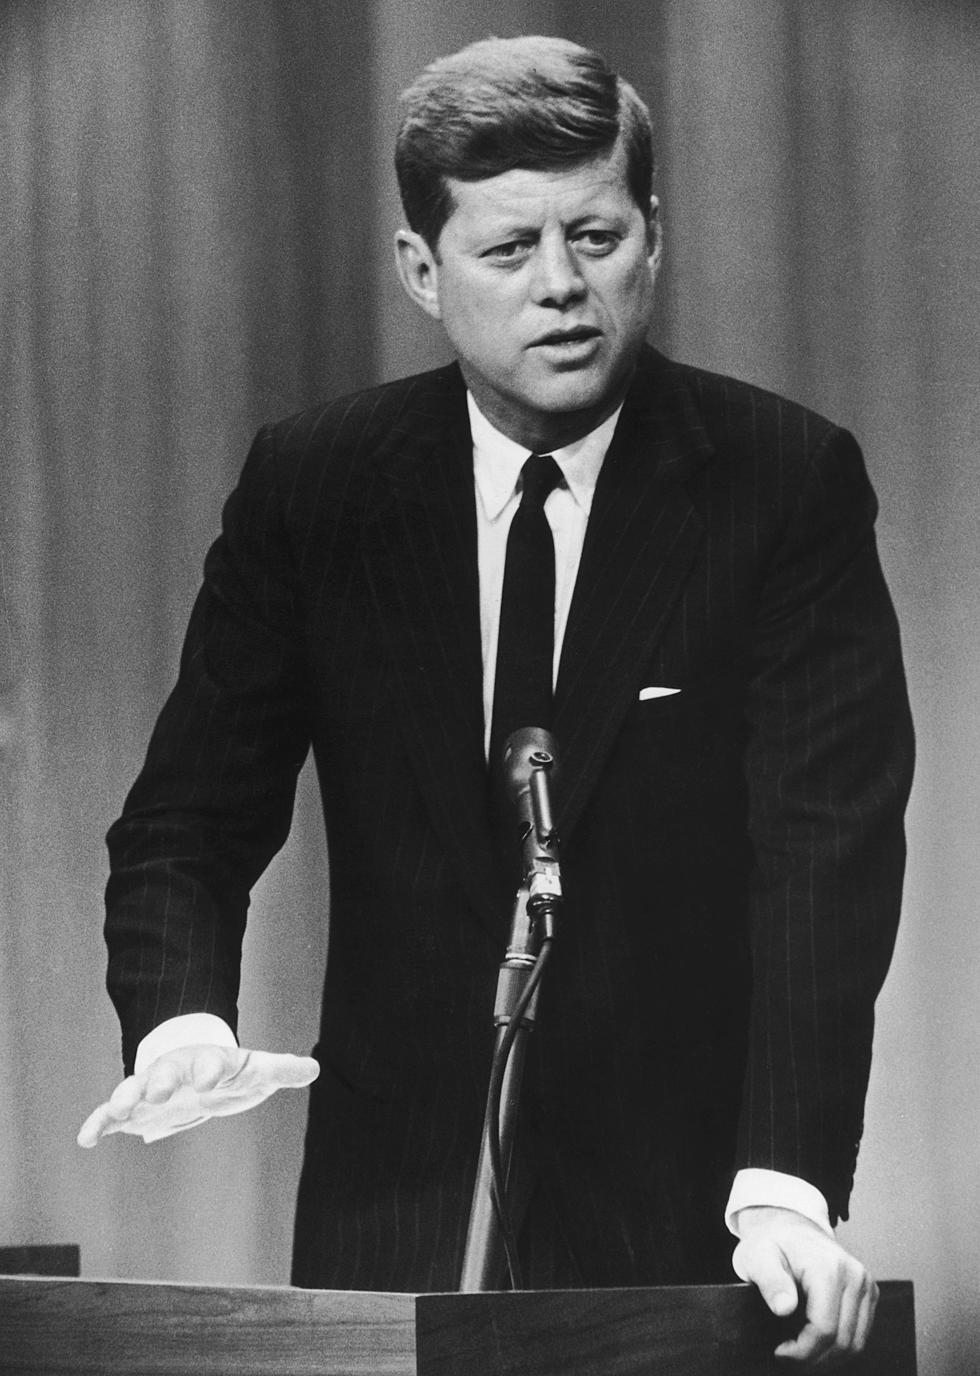 John F. Kennedy, JFK Jr. Failed to Appear in Dallas Yesterday